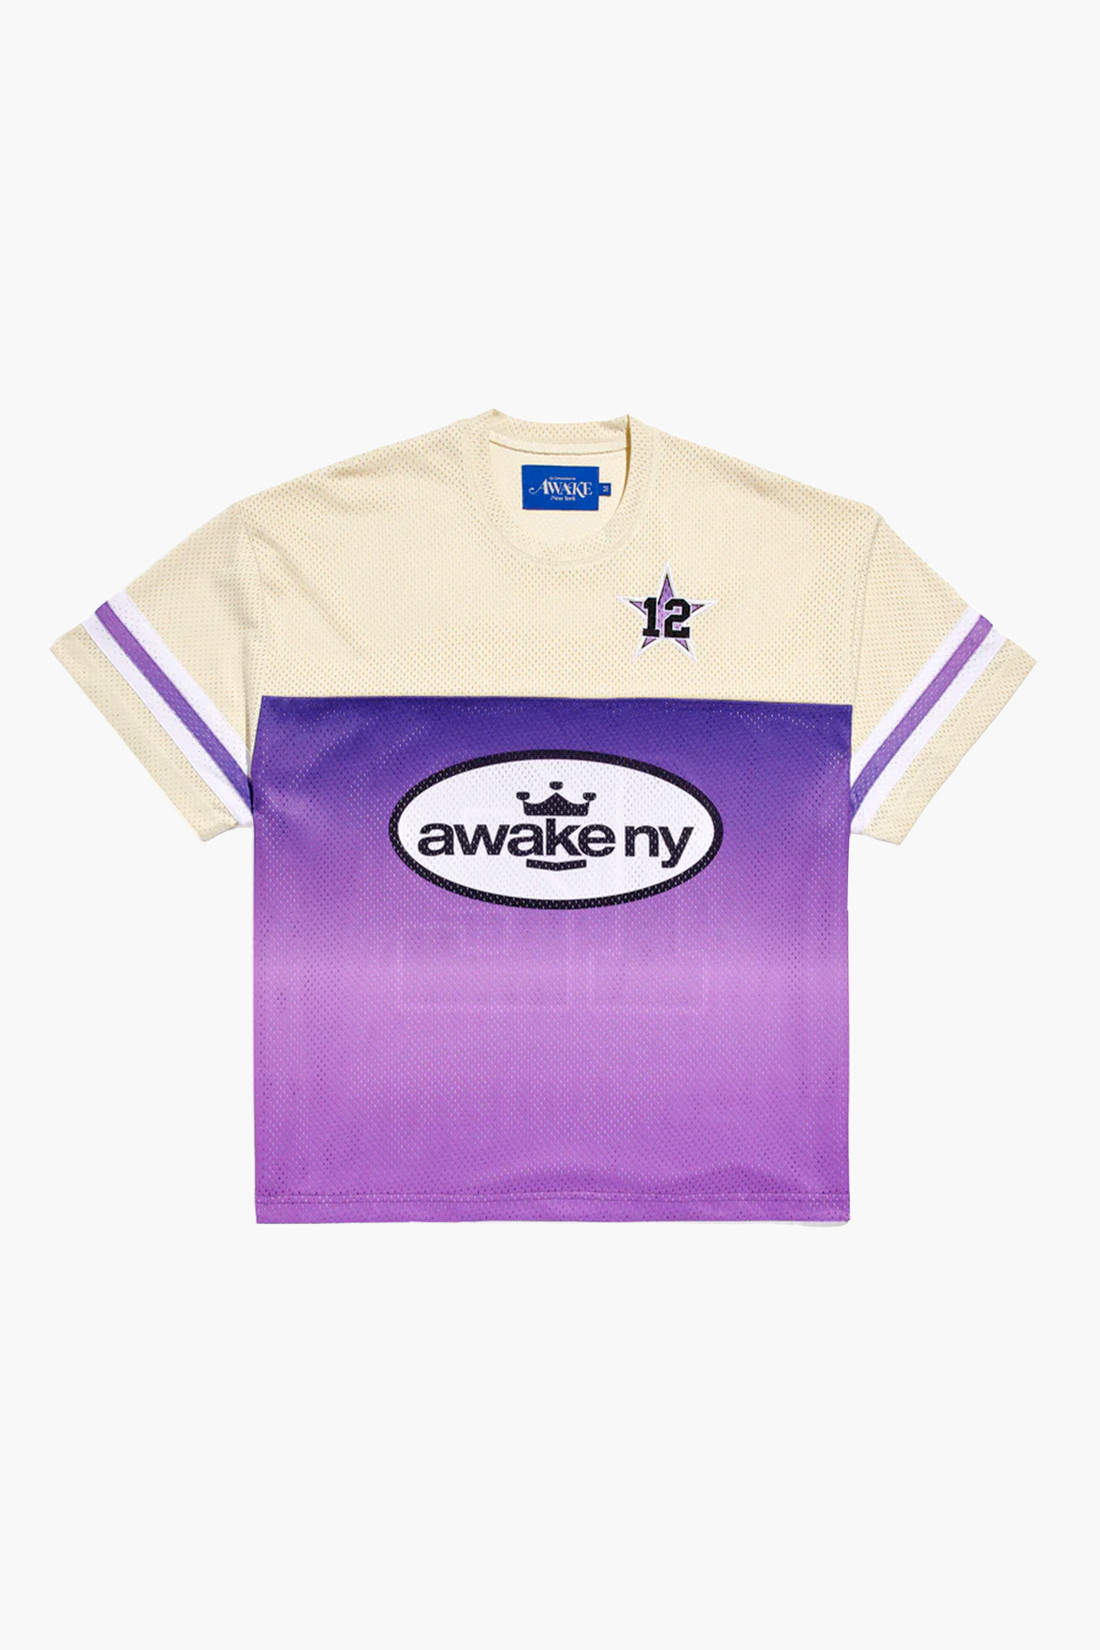 Awake ny King logo short sleeve jersey Cream/purple - GRADUATE ... | FR